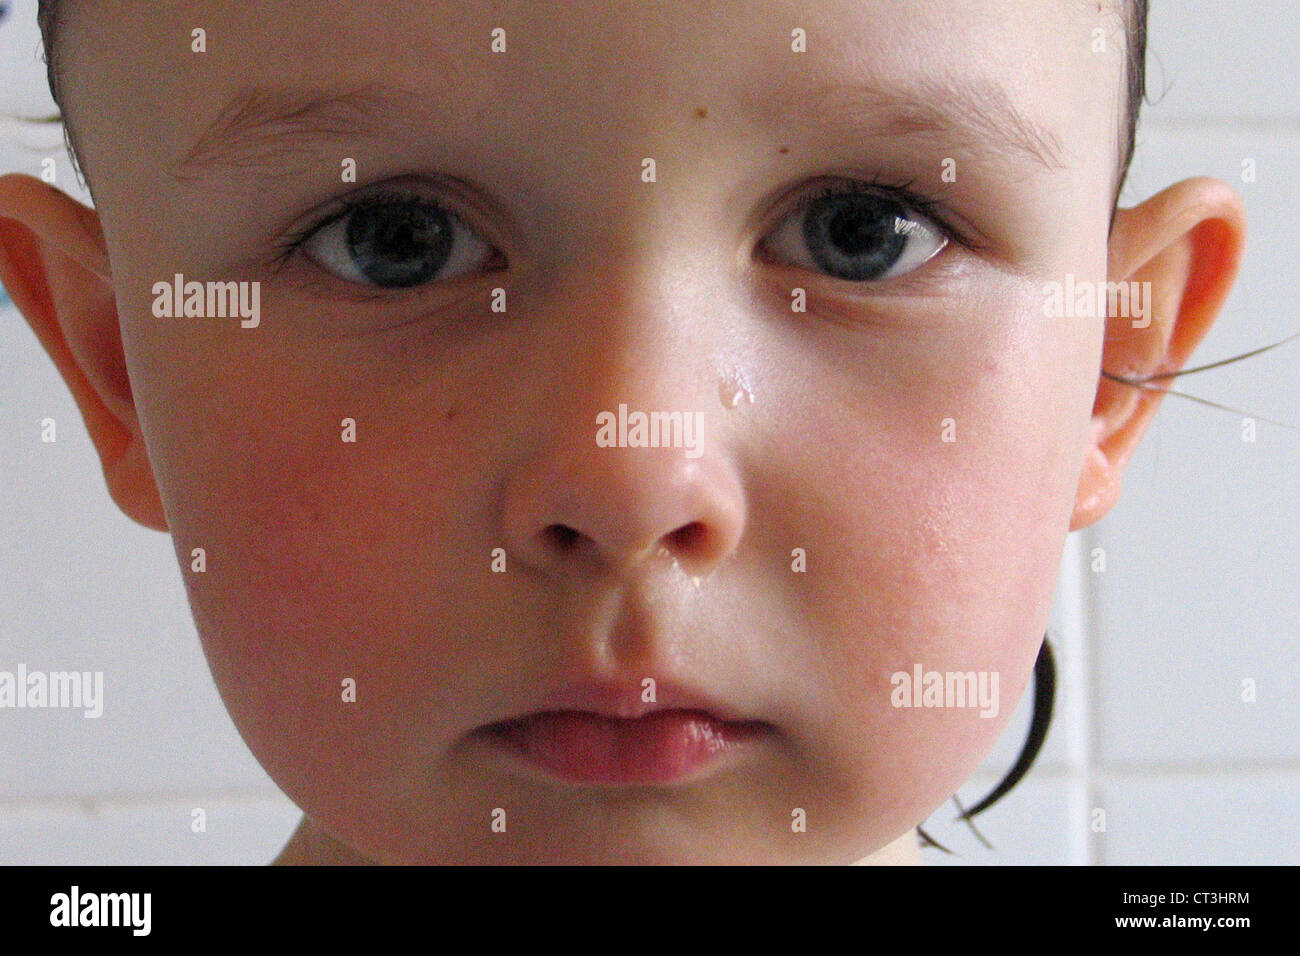 Symbolfoto sad child's face Stock Photo